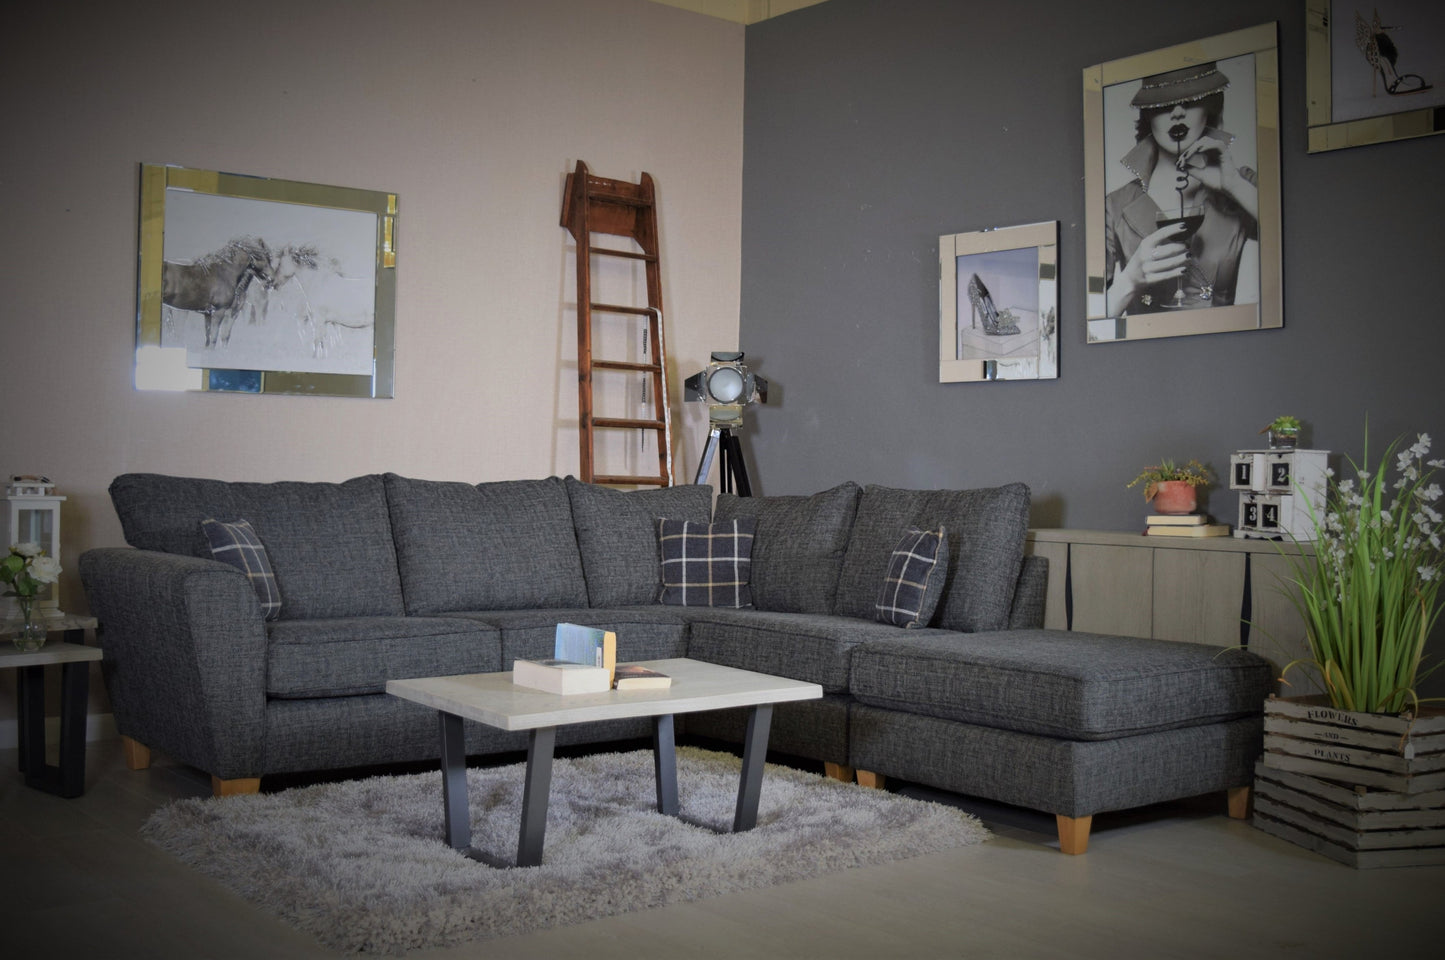 The Lucca Range - Chaise Cornergroup Sofa